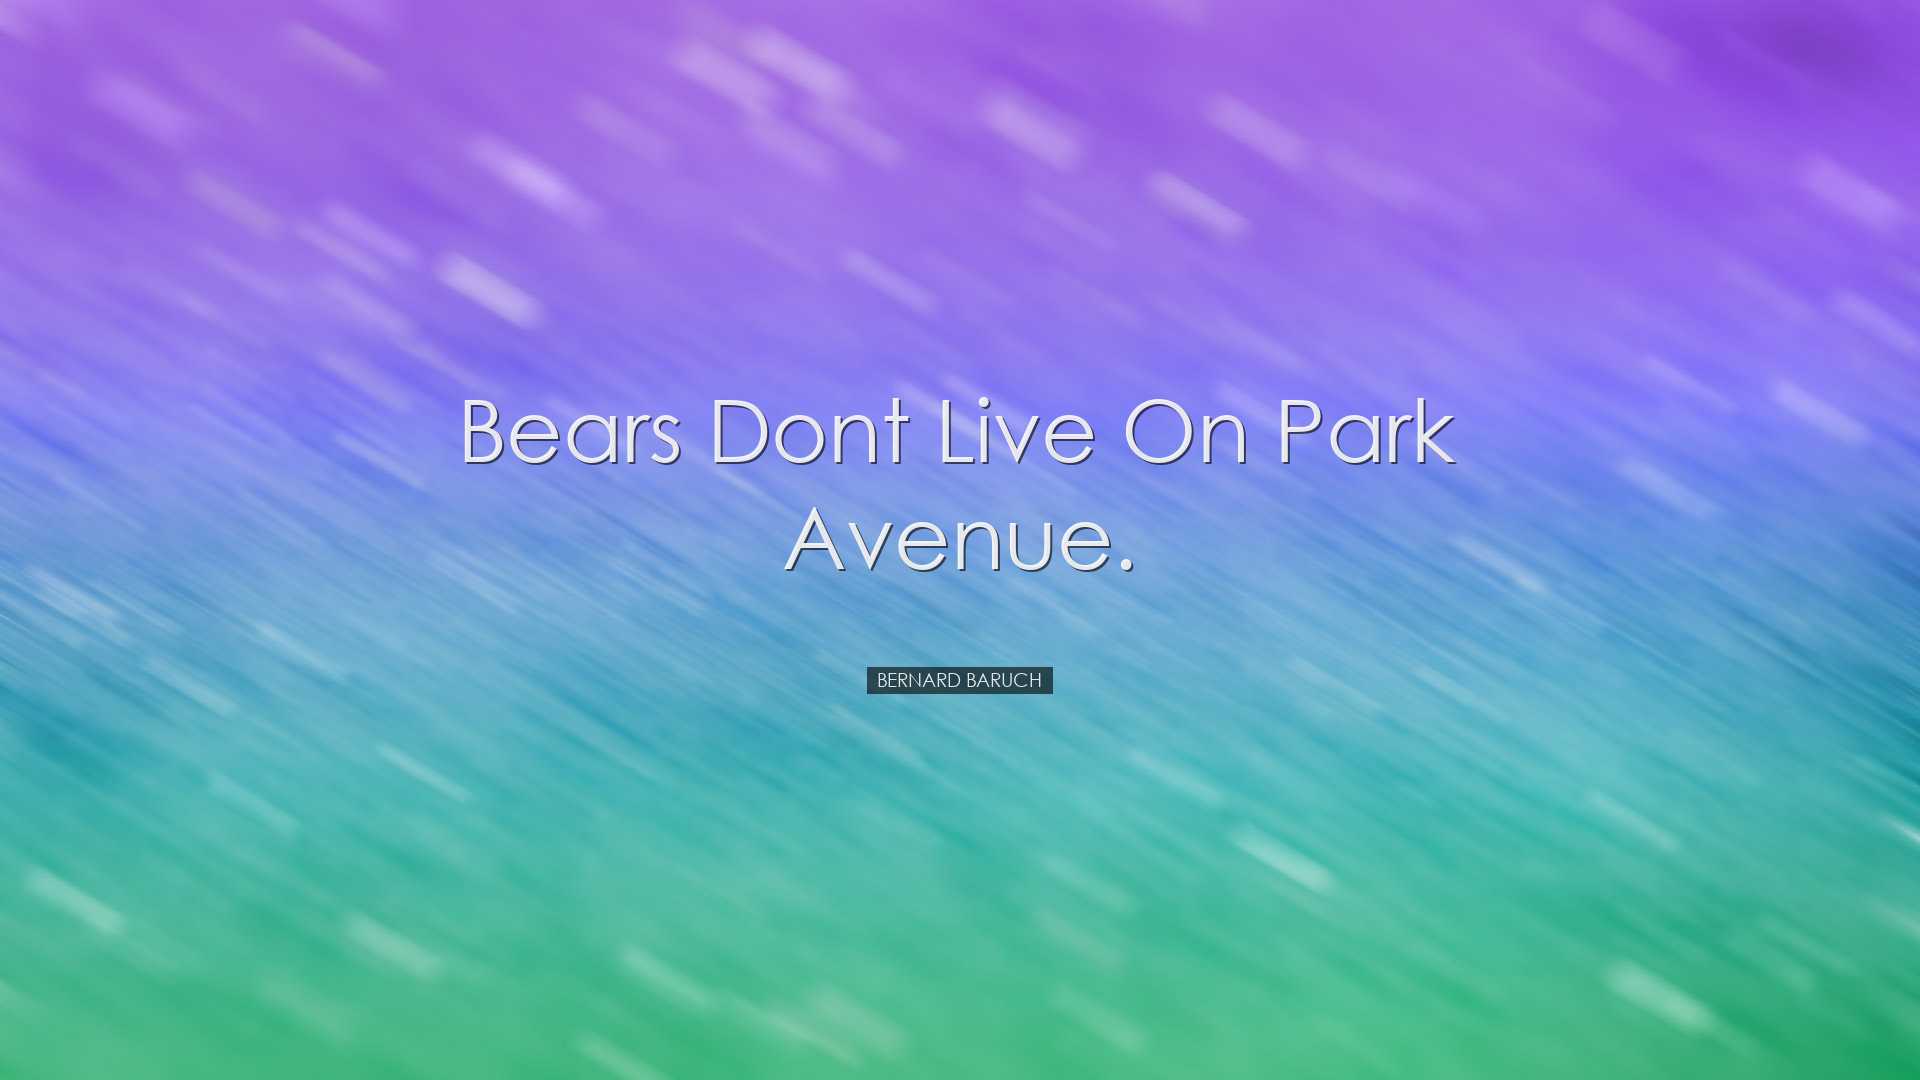 Bears dont live on Park Avenue. - Bernard Baruch